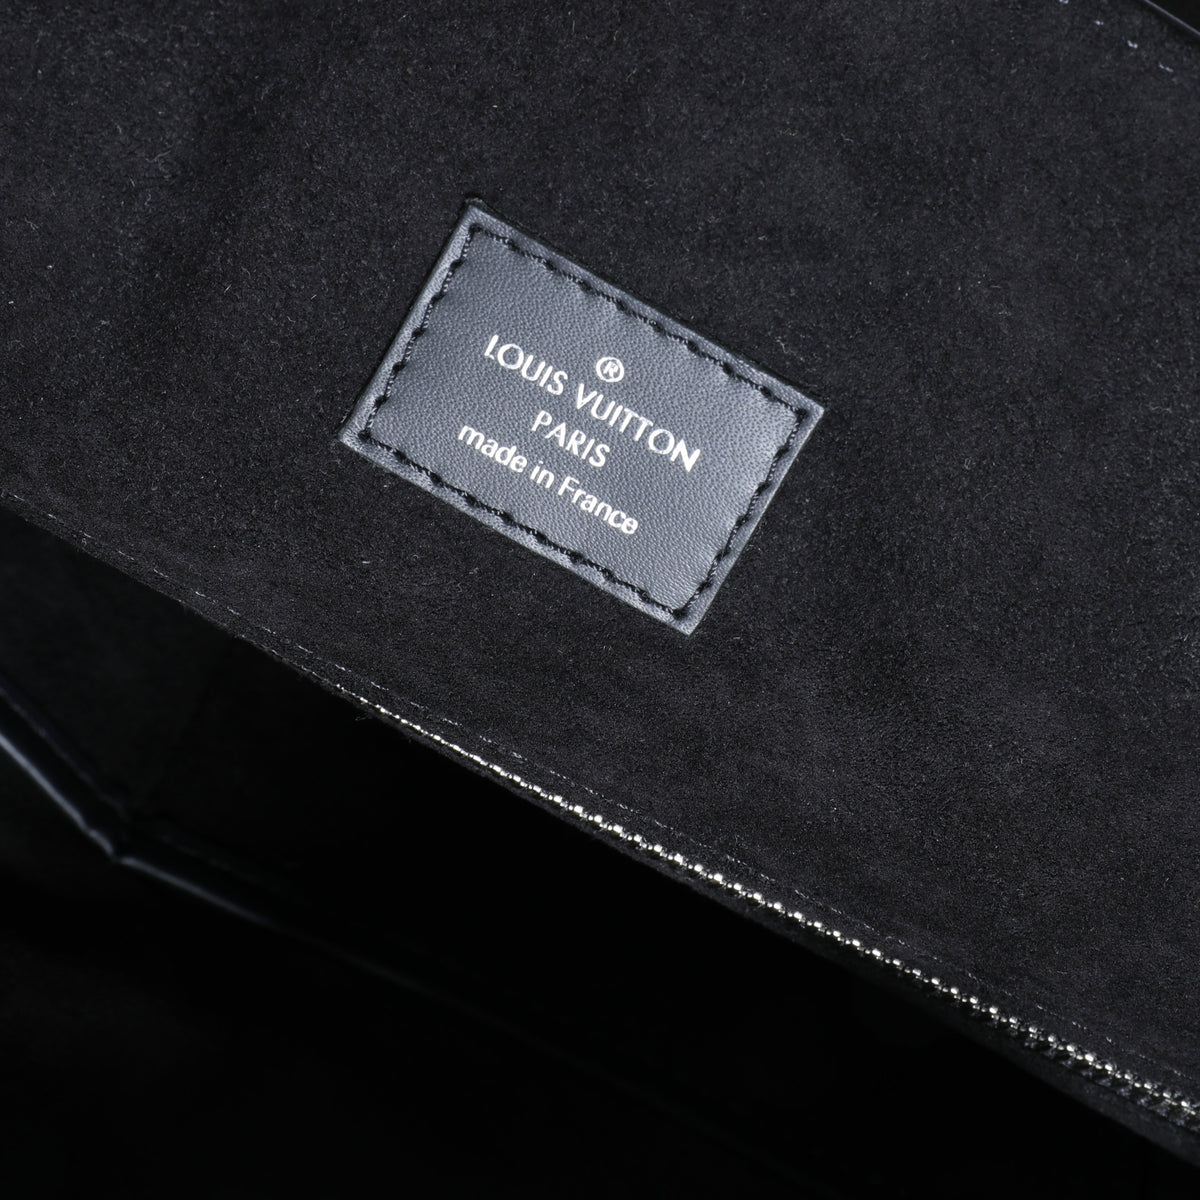 LV LV Unisex Christopher PM Backpack in Timeless Black Epi Leather